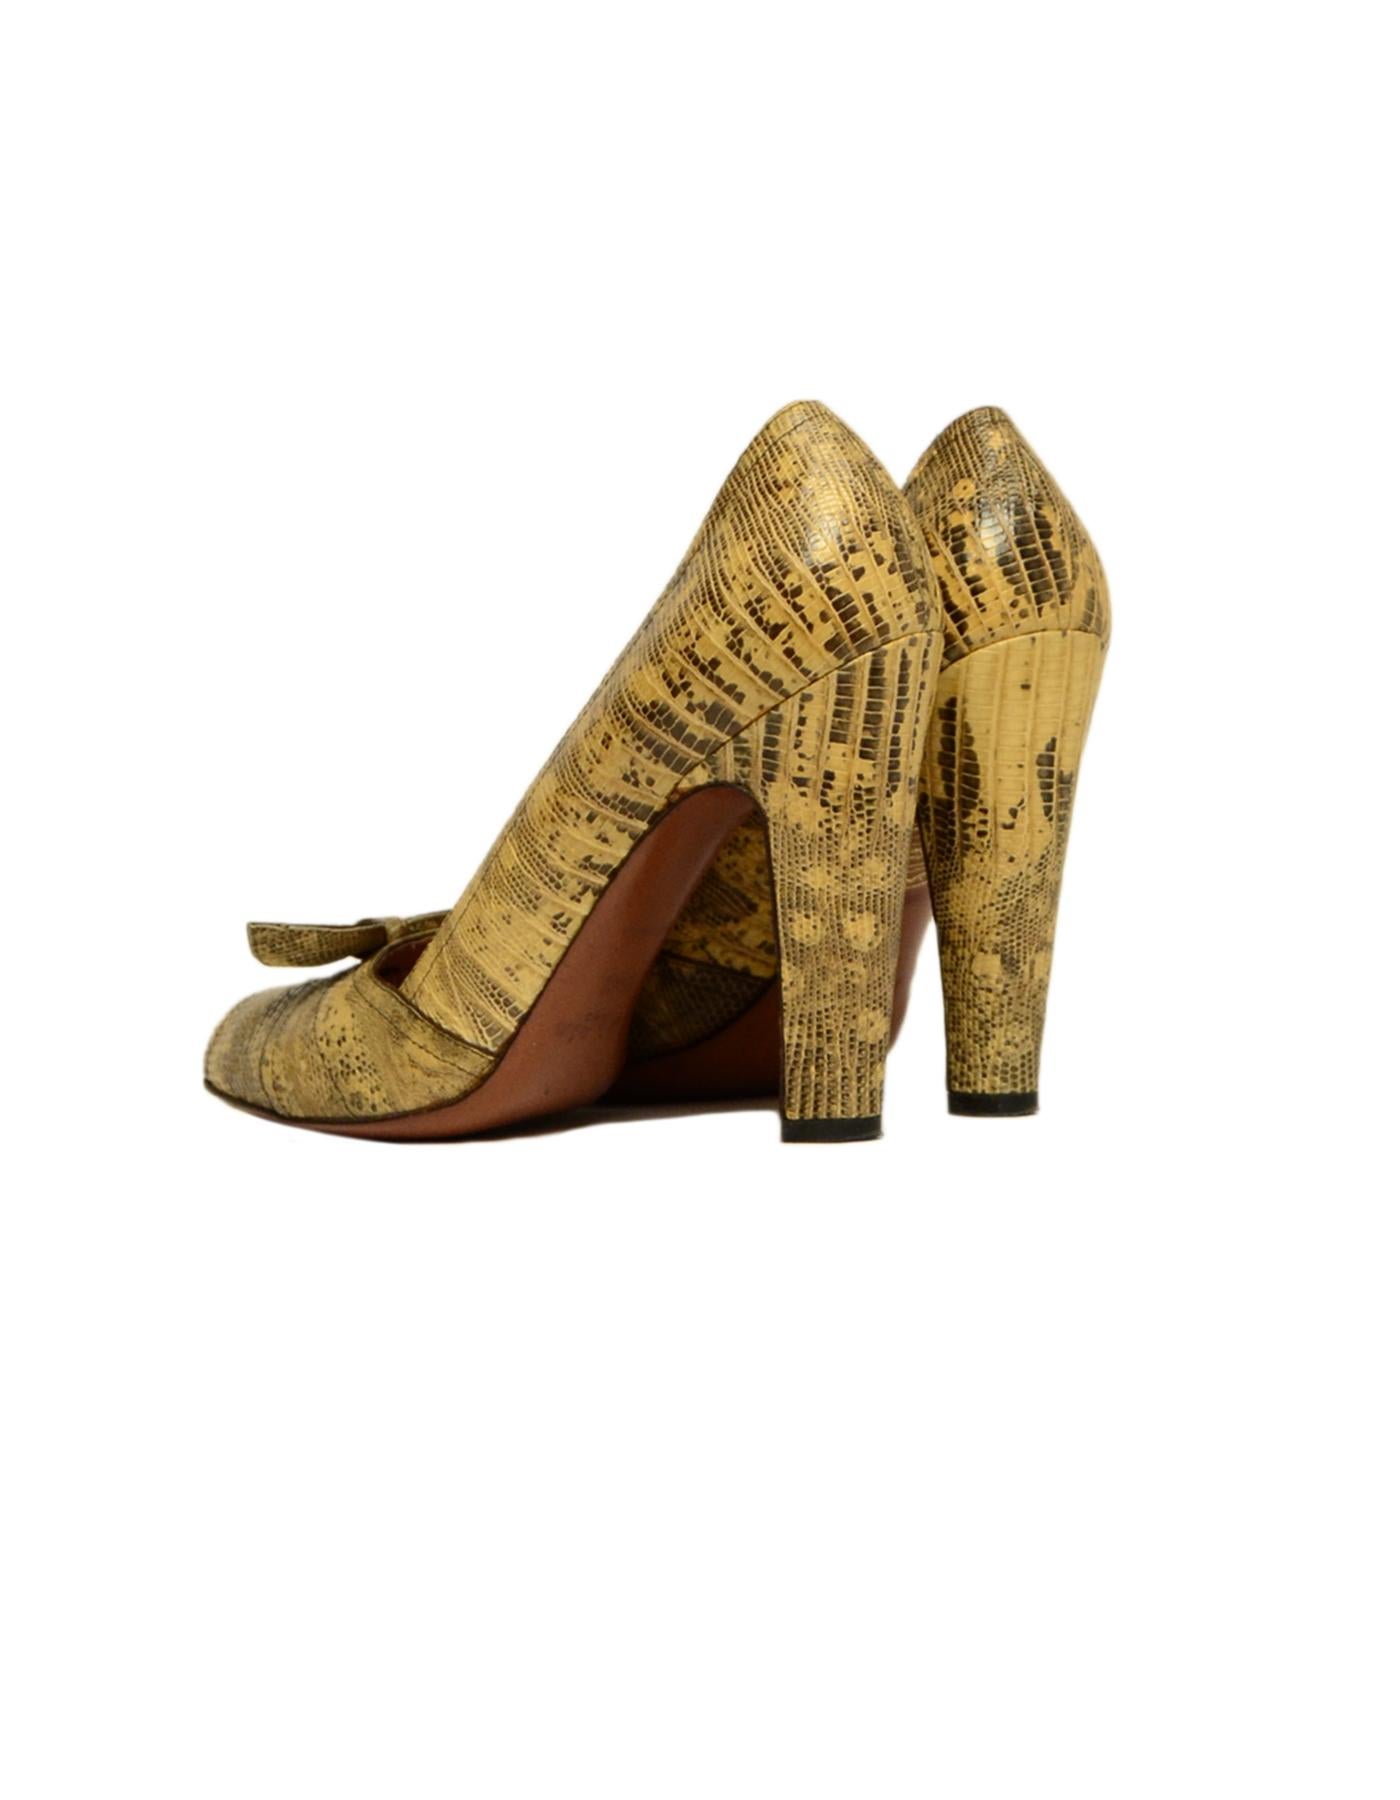 Alaia Beige Lizard Peep Toe Heels w/ Bow sz 38.5 In Good Condition In New York, NY